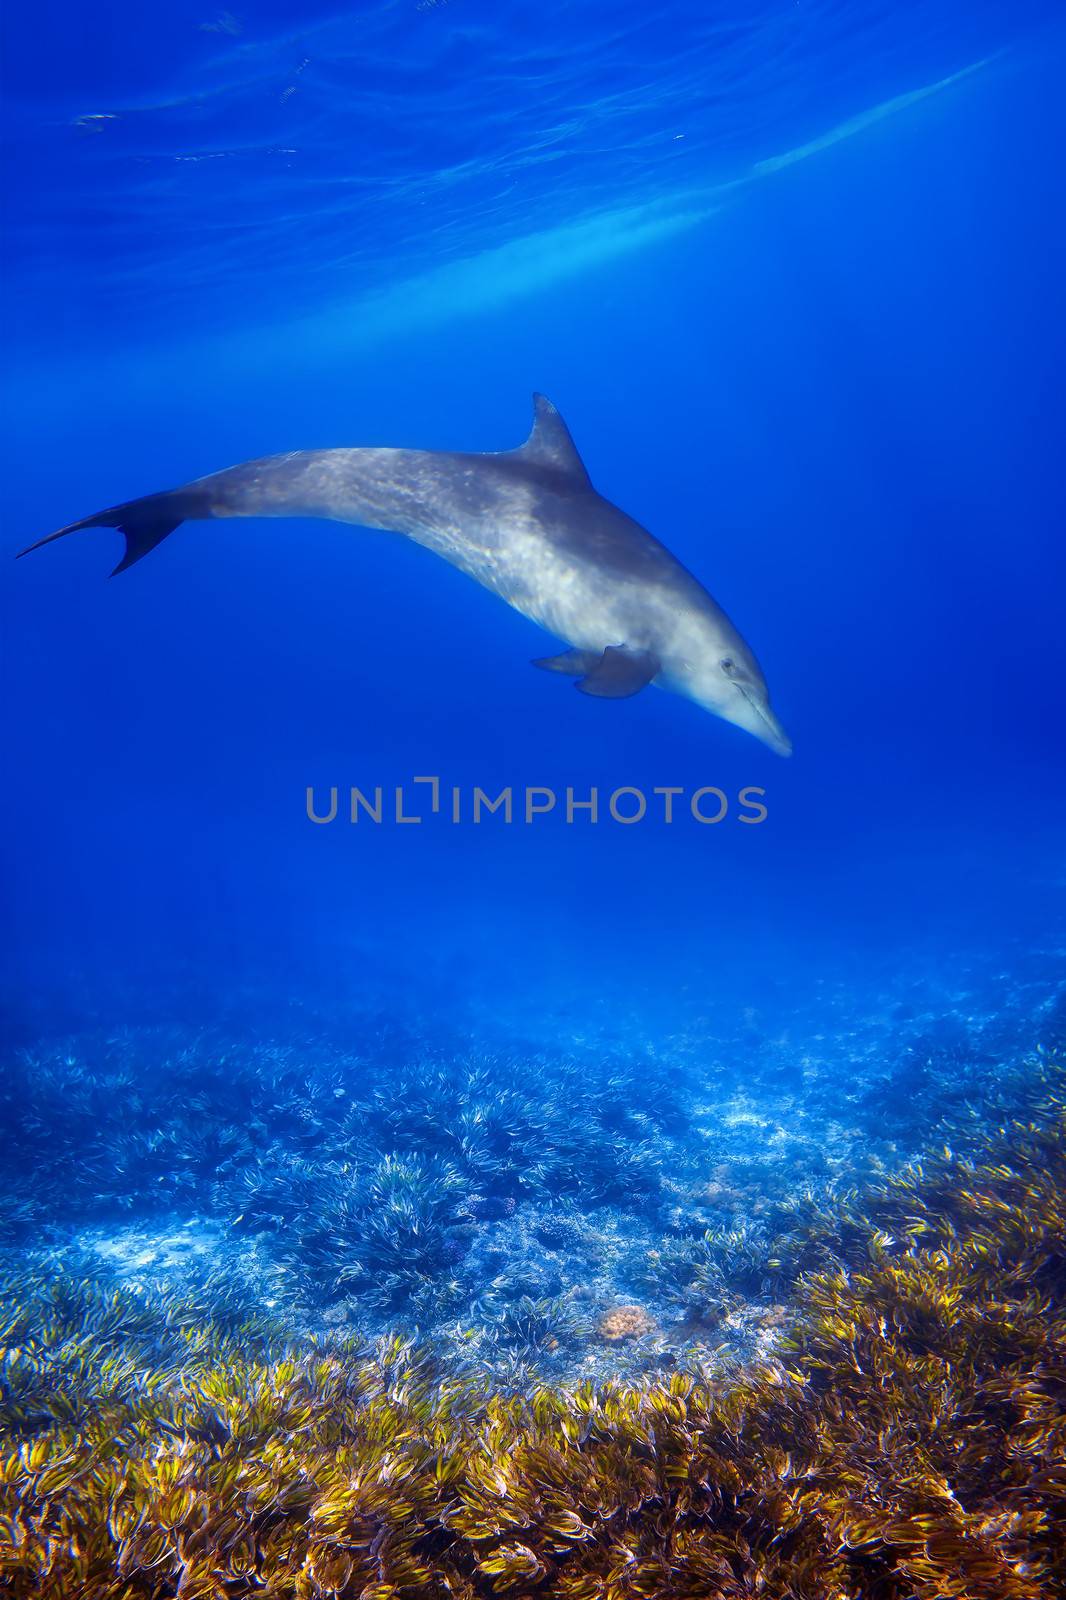 Wild Dolphin and sea grass in blue ocean of Zanzibar